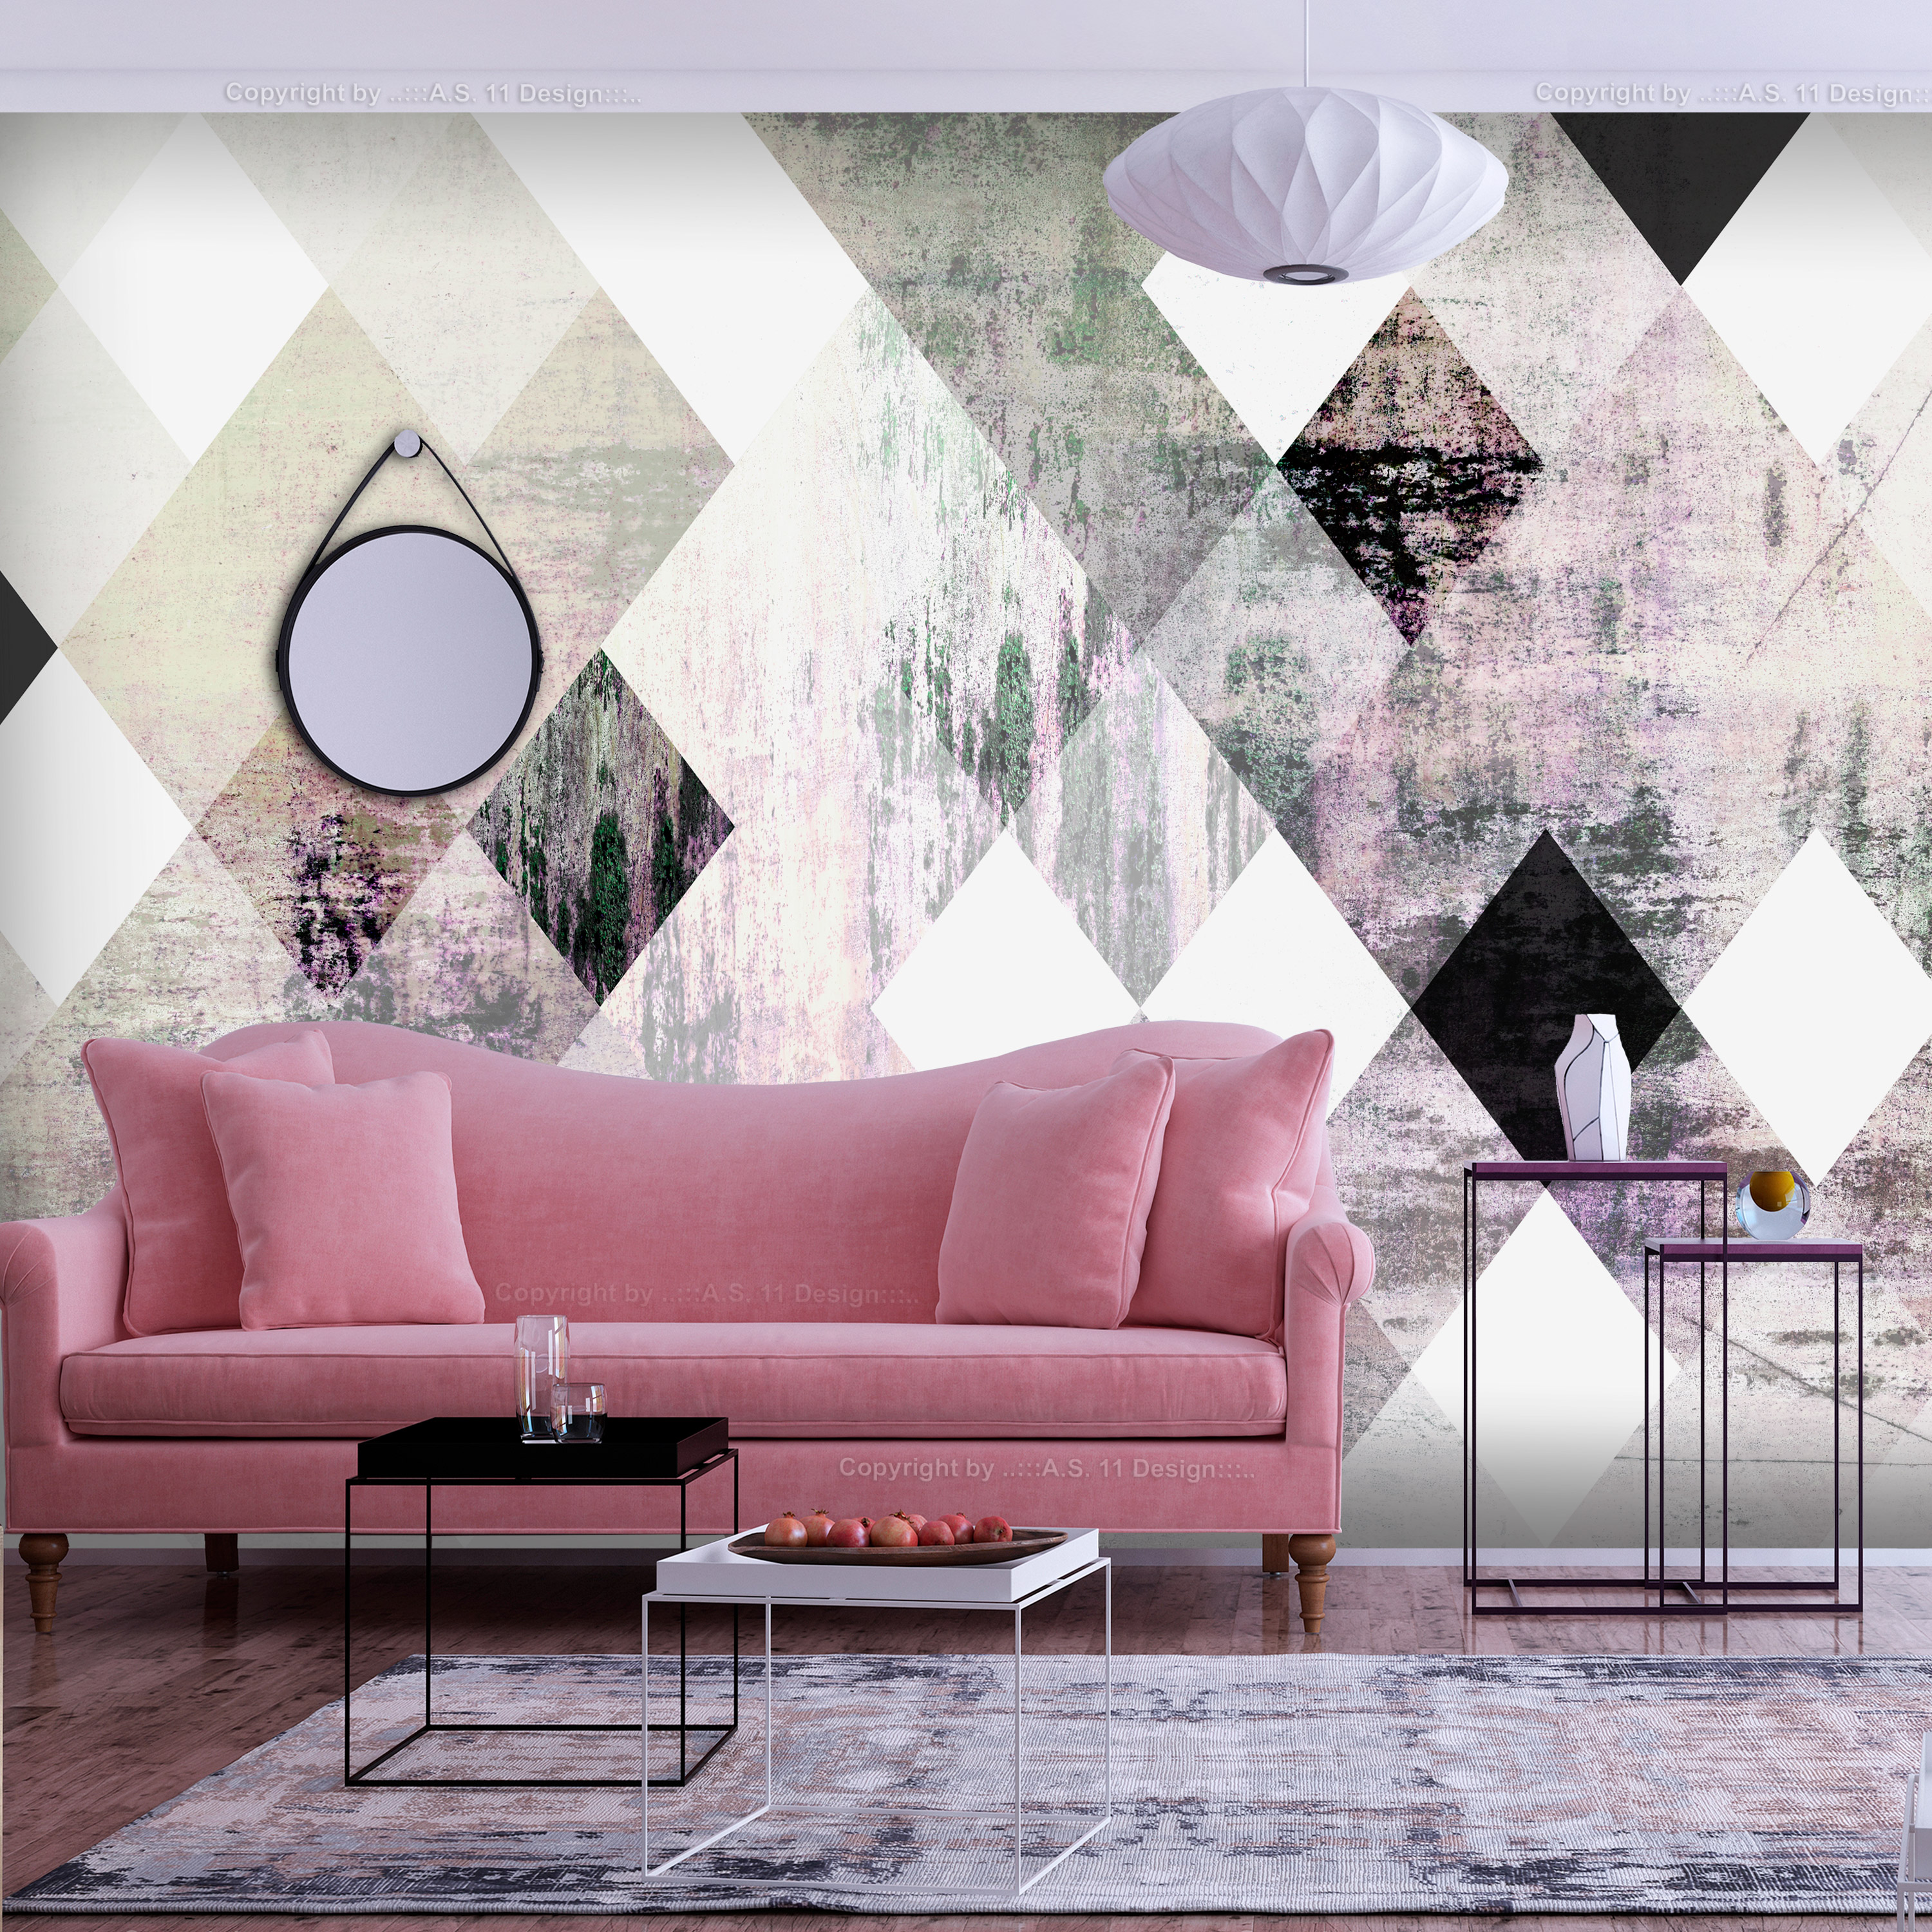 Self-adhesive Wallpaper - Rhombic Chessboard (Pink) - 147x105